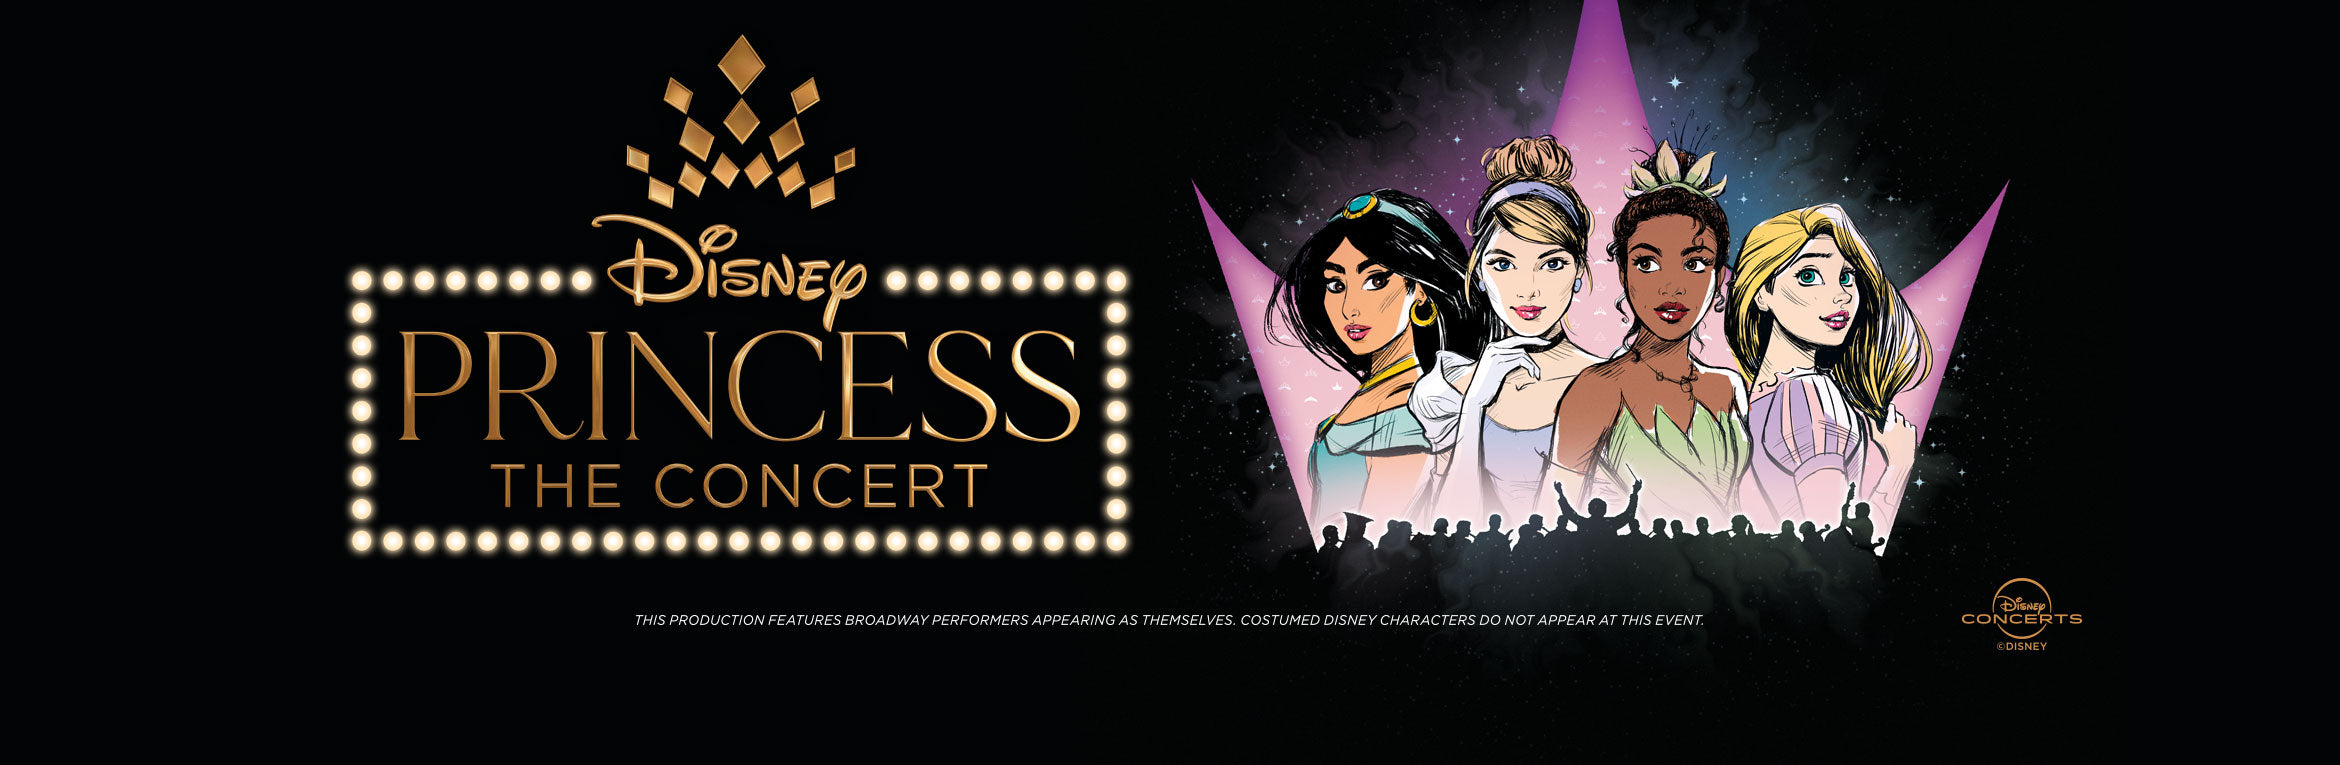 Disney Princess The Concert